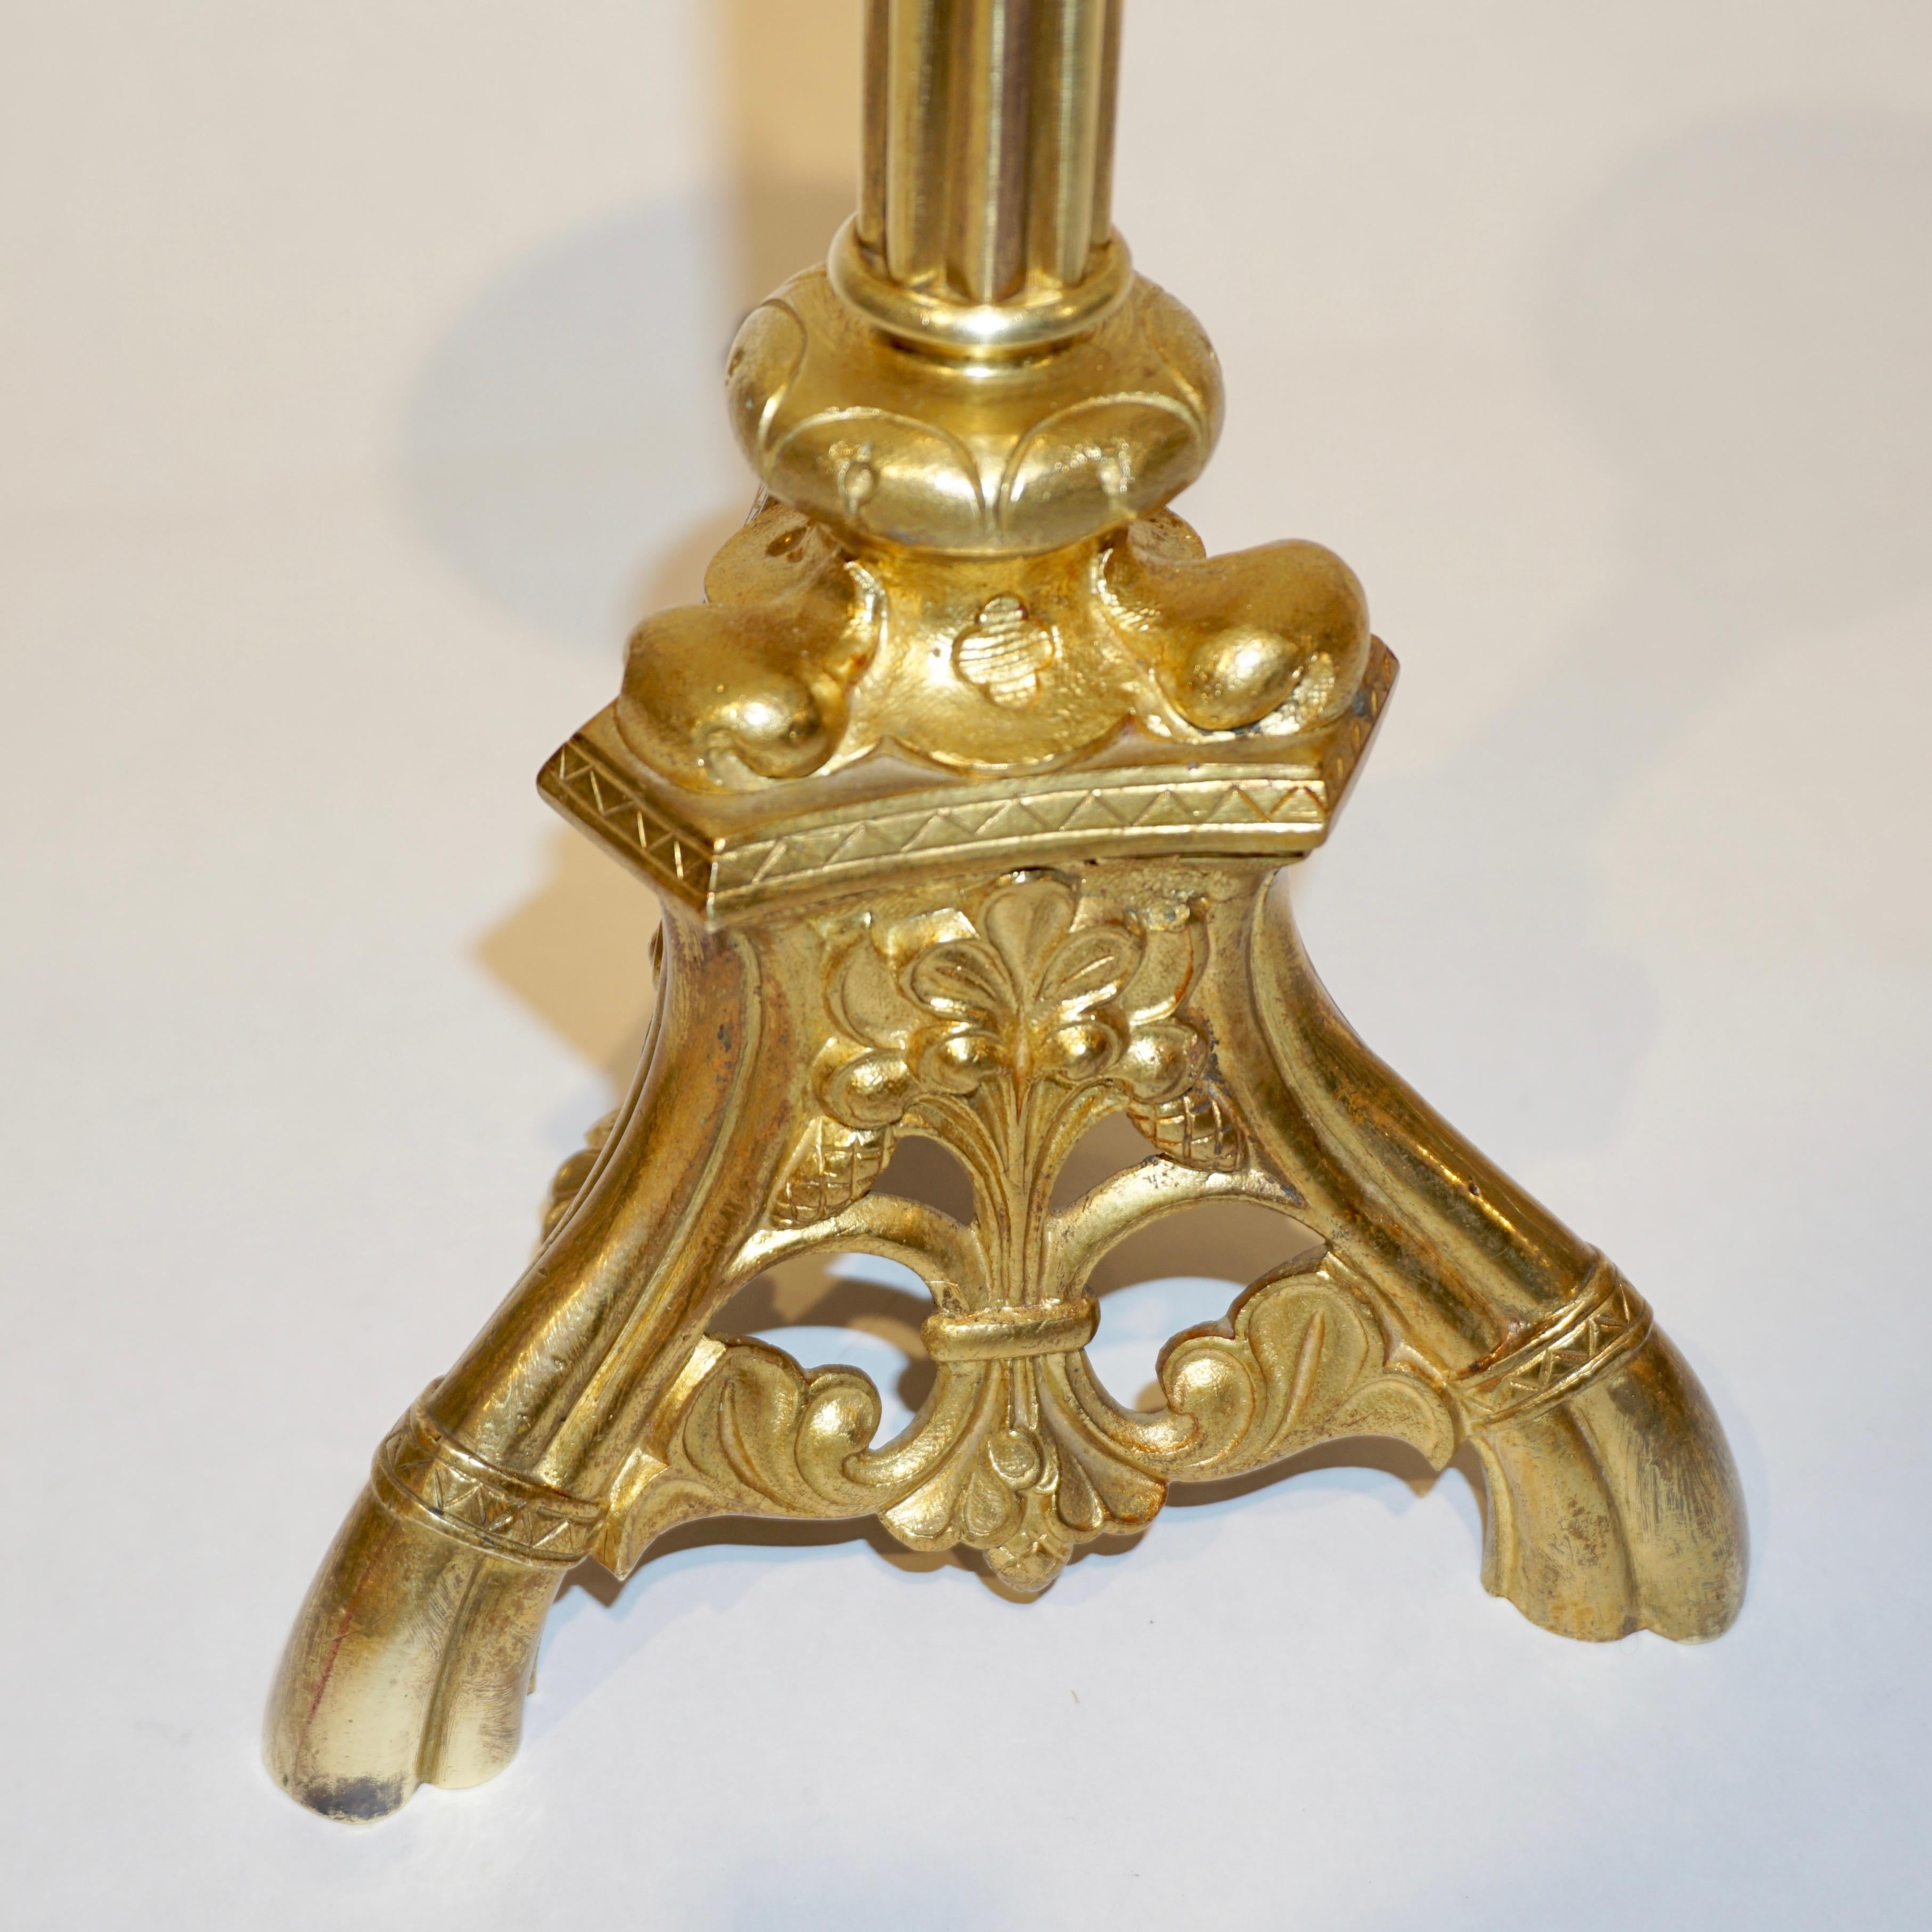 19th Century 1880s French Baroque Revival Gilt Bronze Ormolu Pricket Candlestick